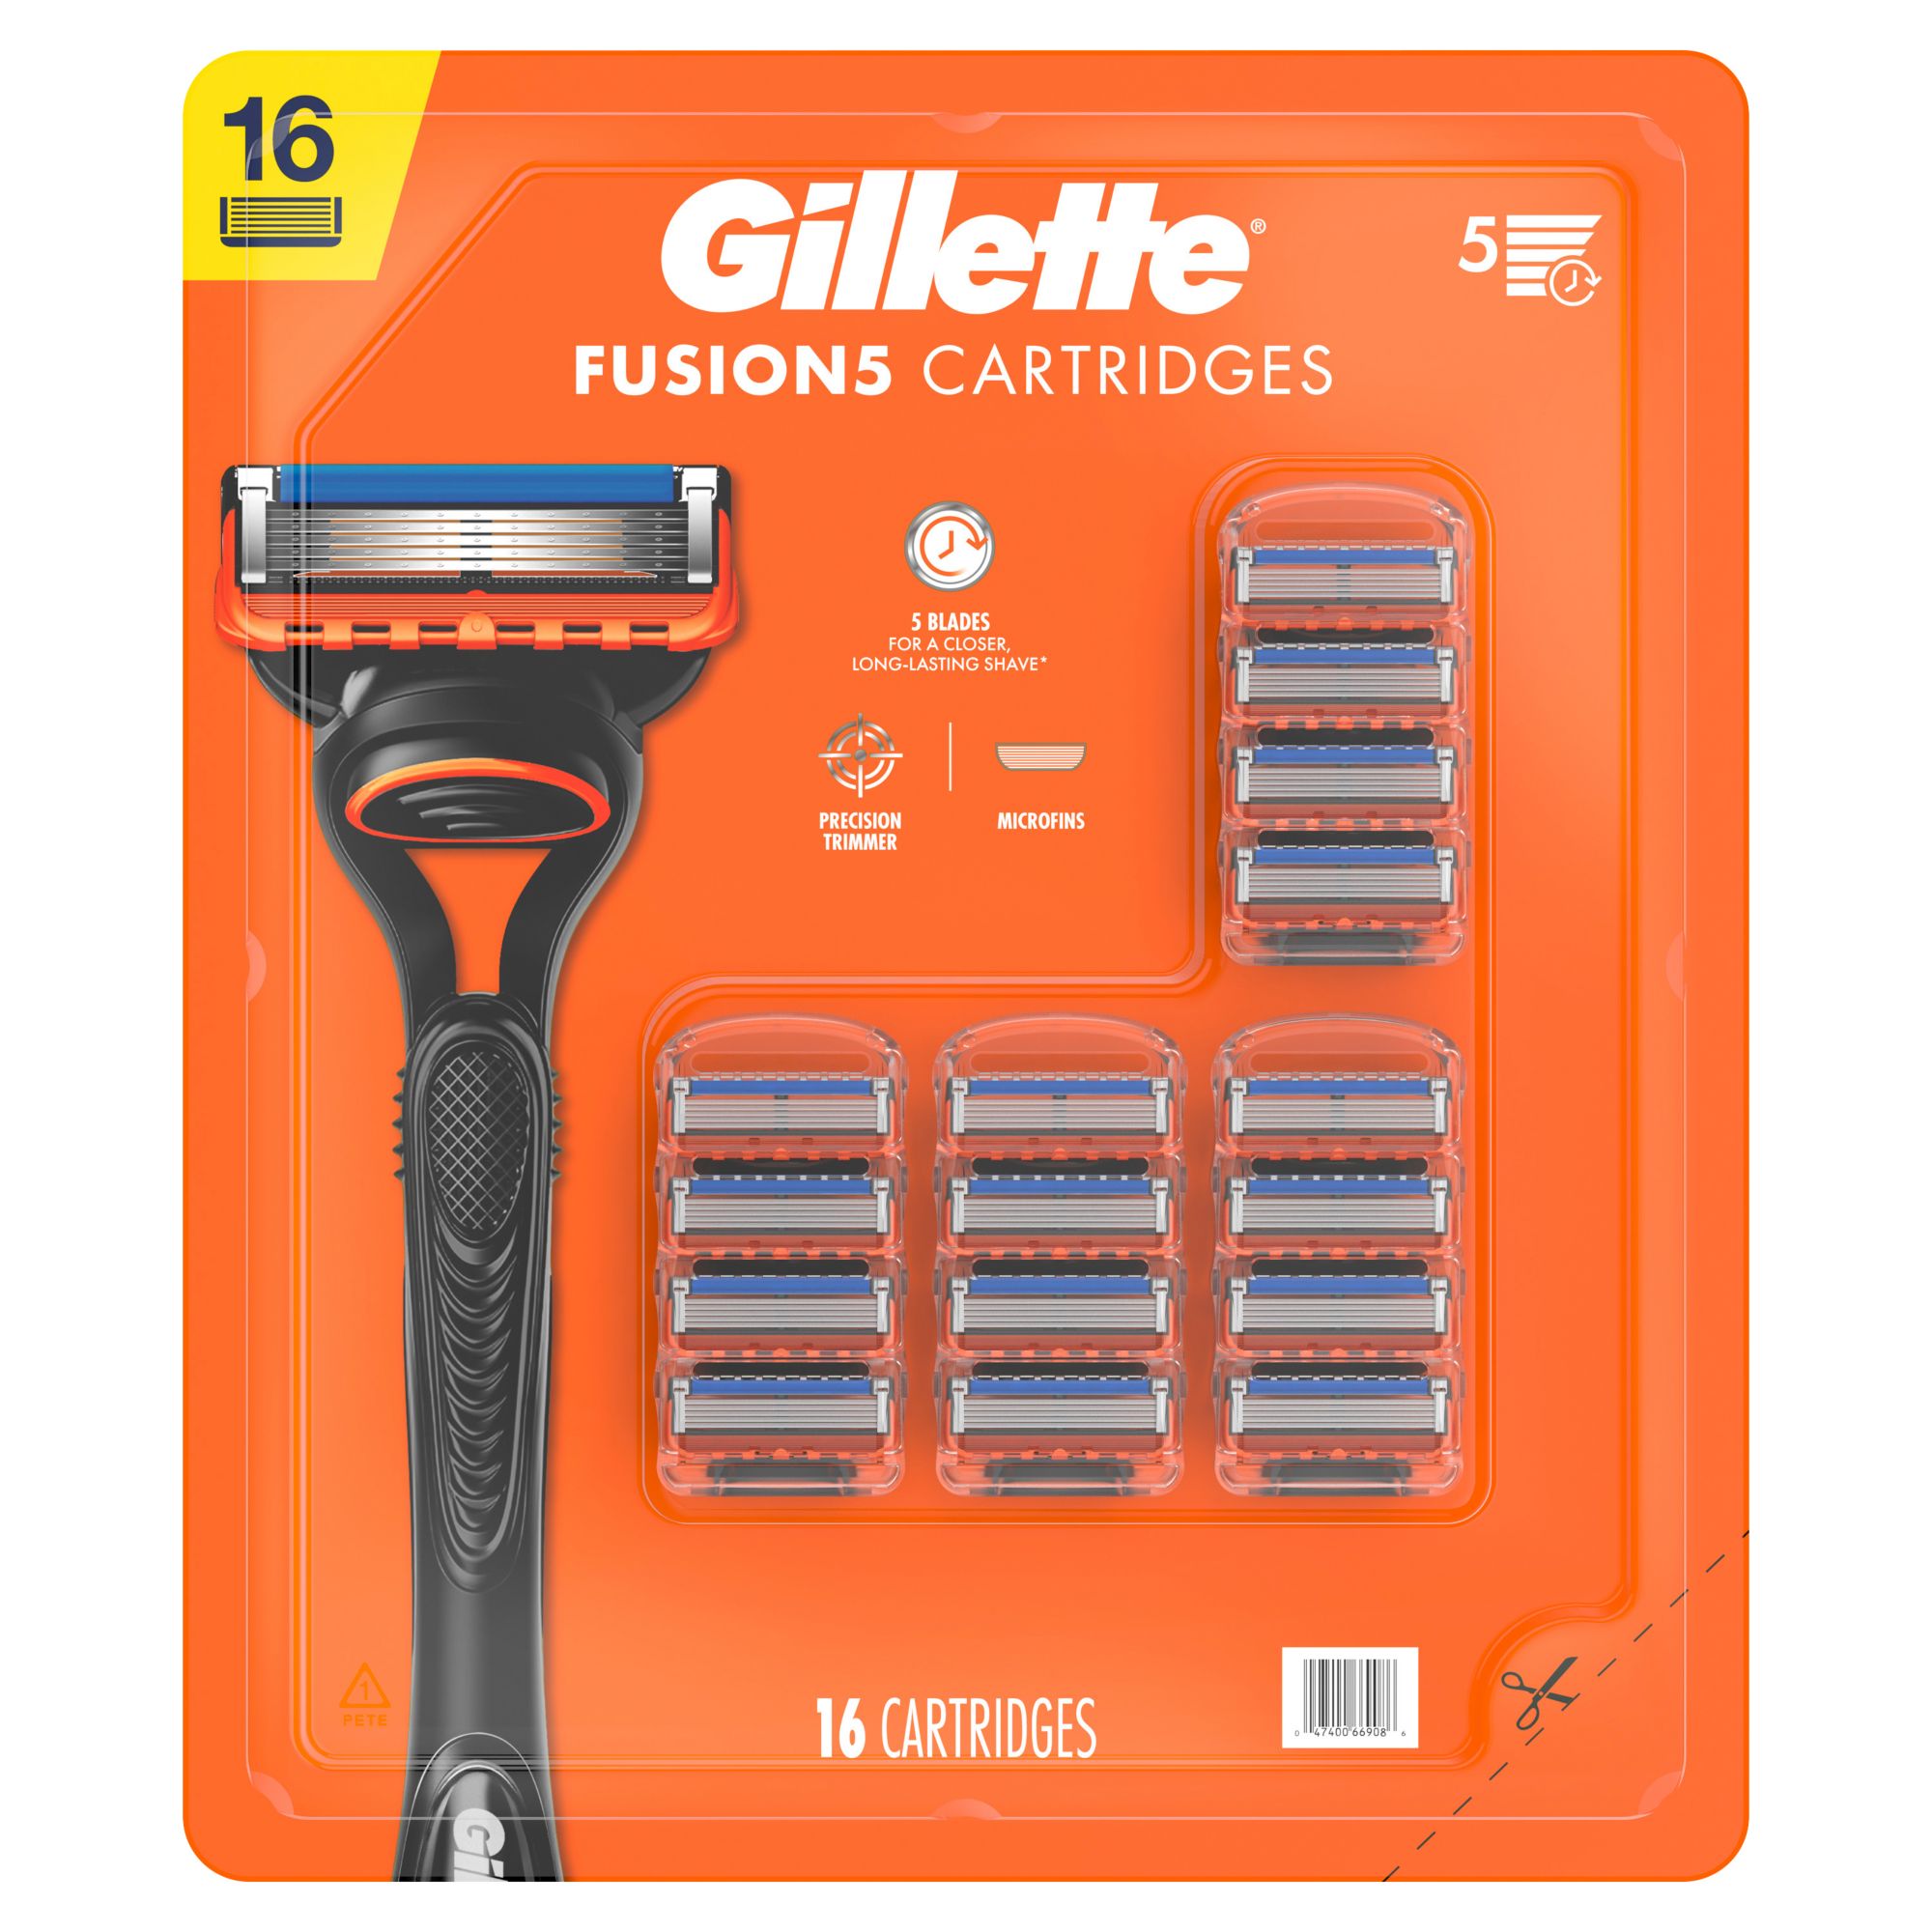 Gillette Fusion5 Razor Refills for Men, 4 Razor Blade Refills